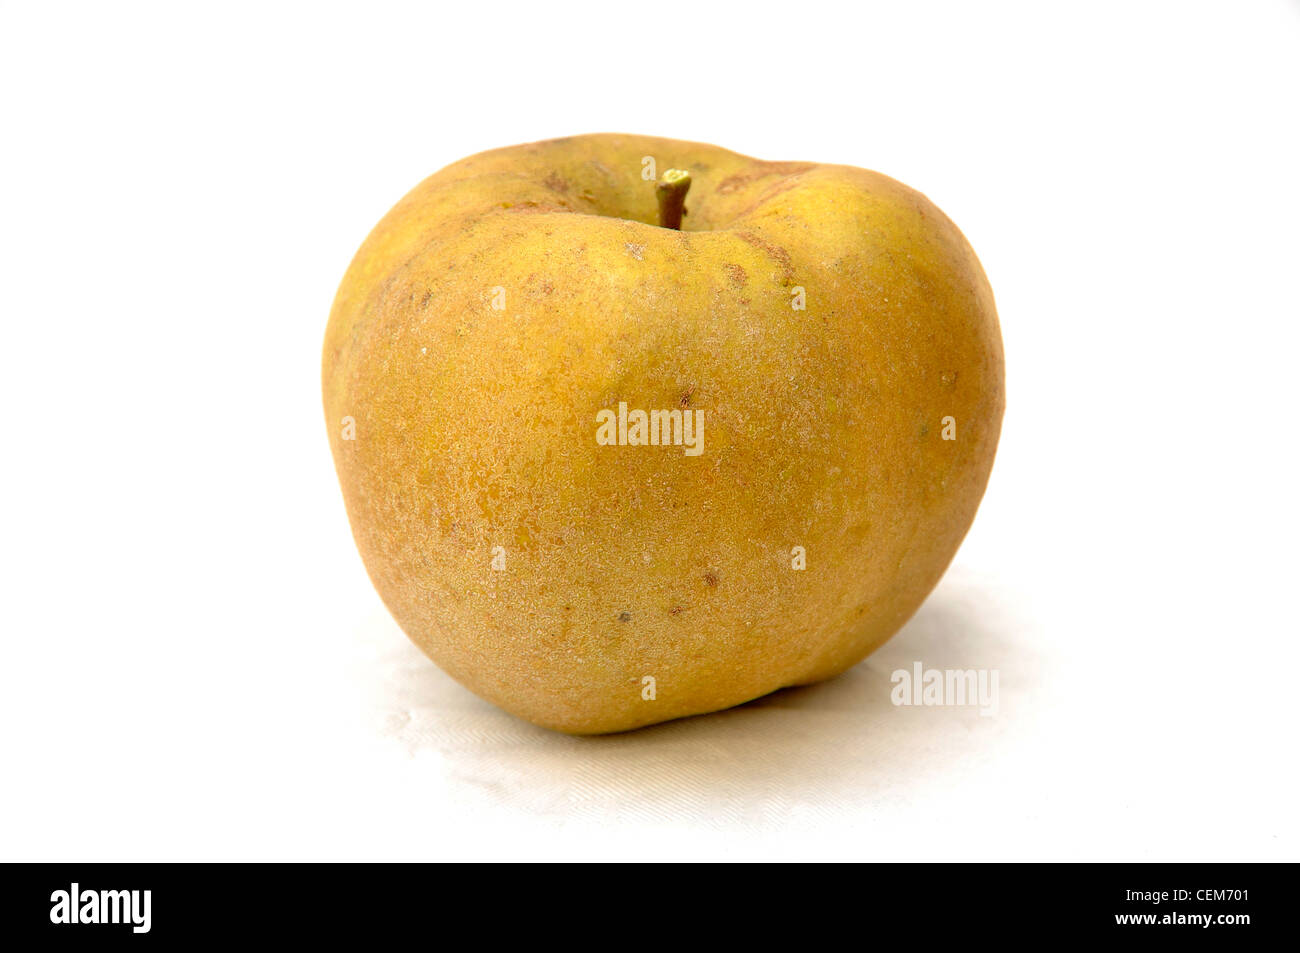 Russet apple (Malus domestica). Stock Photo